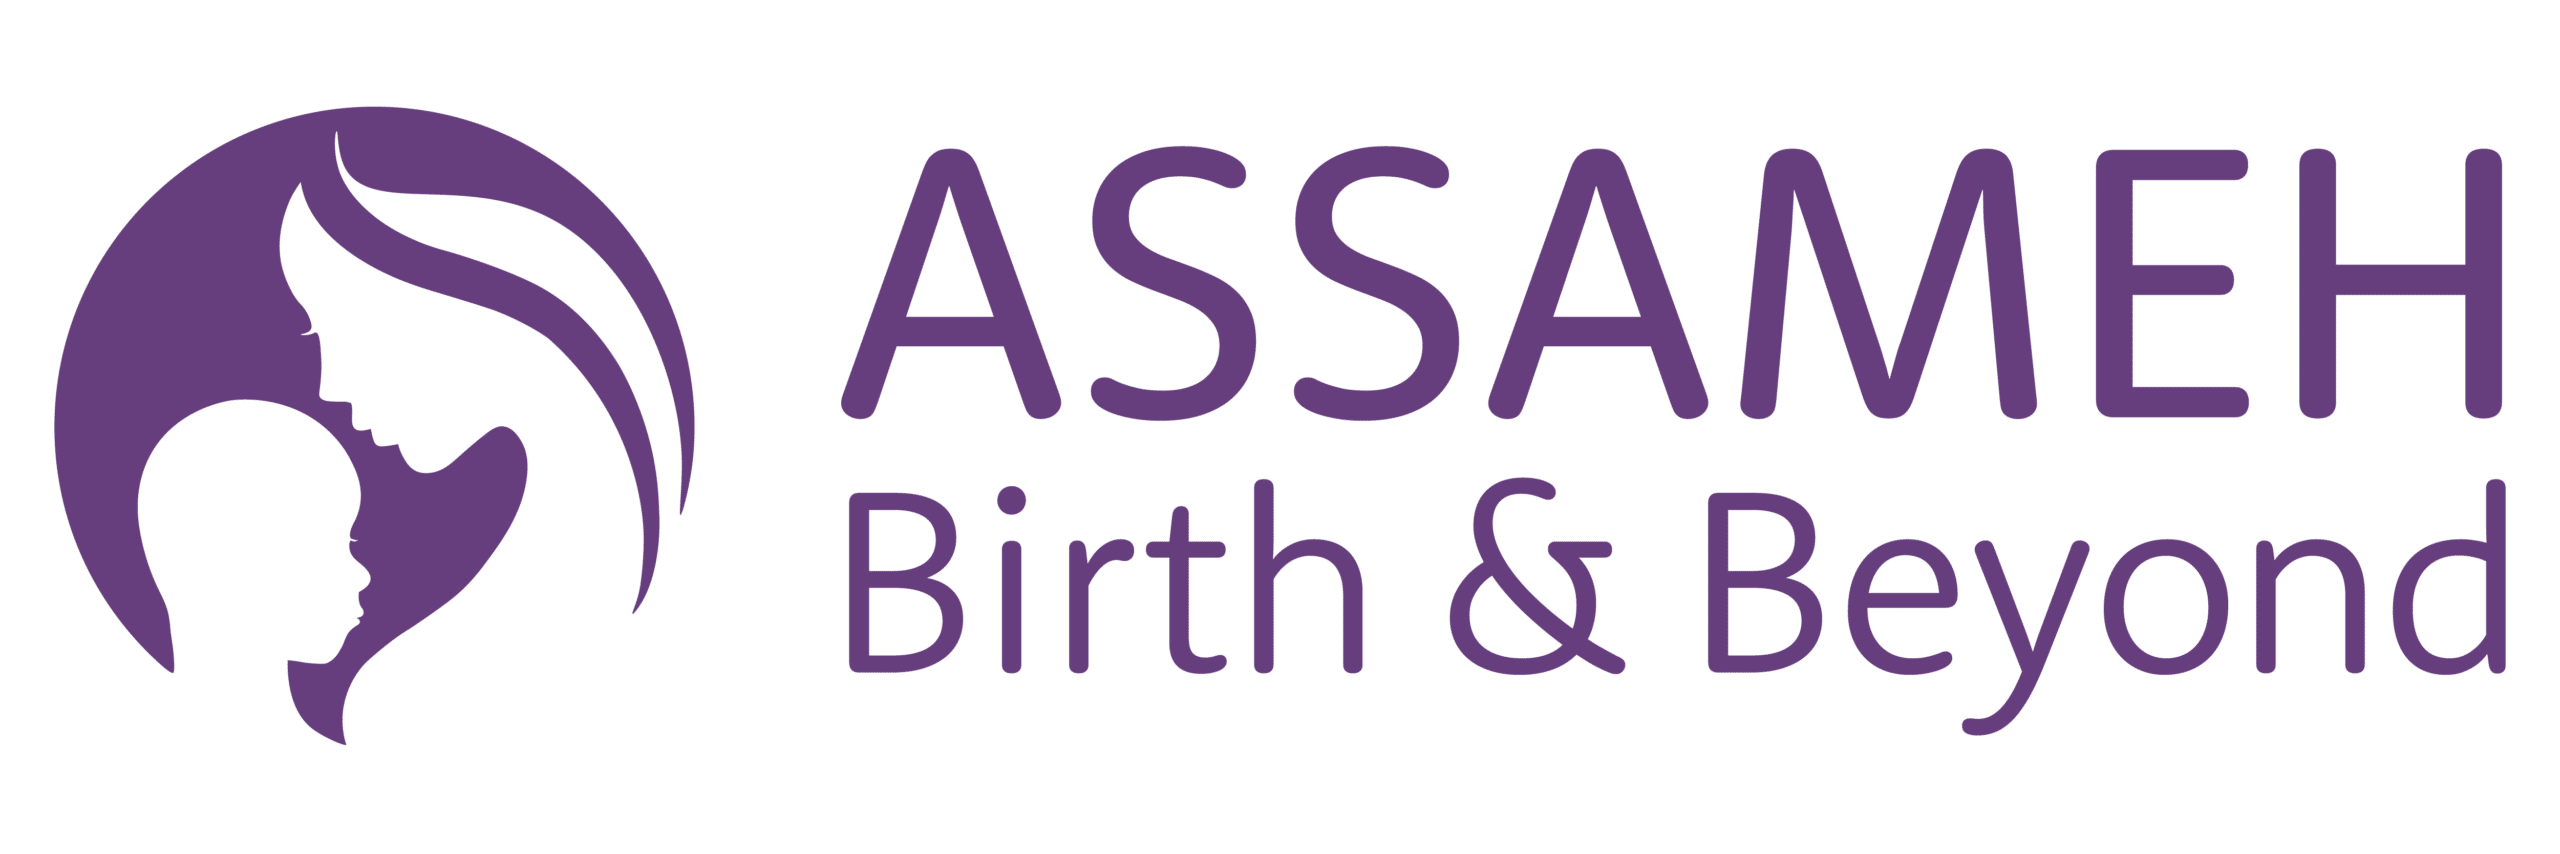 ASSAMEH Birth & Beyond